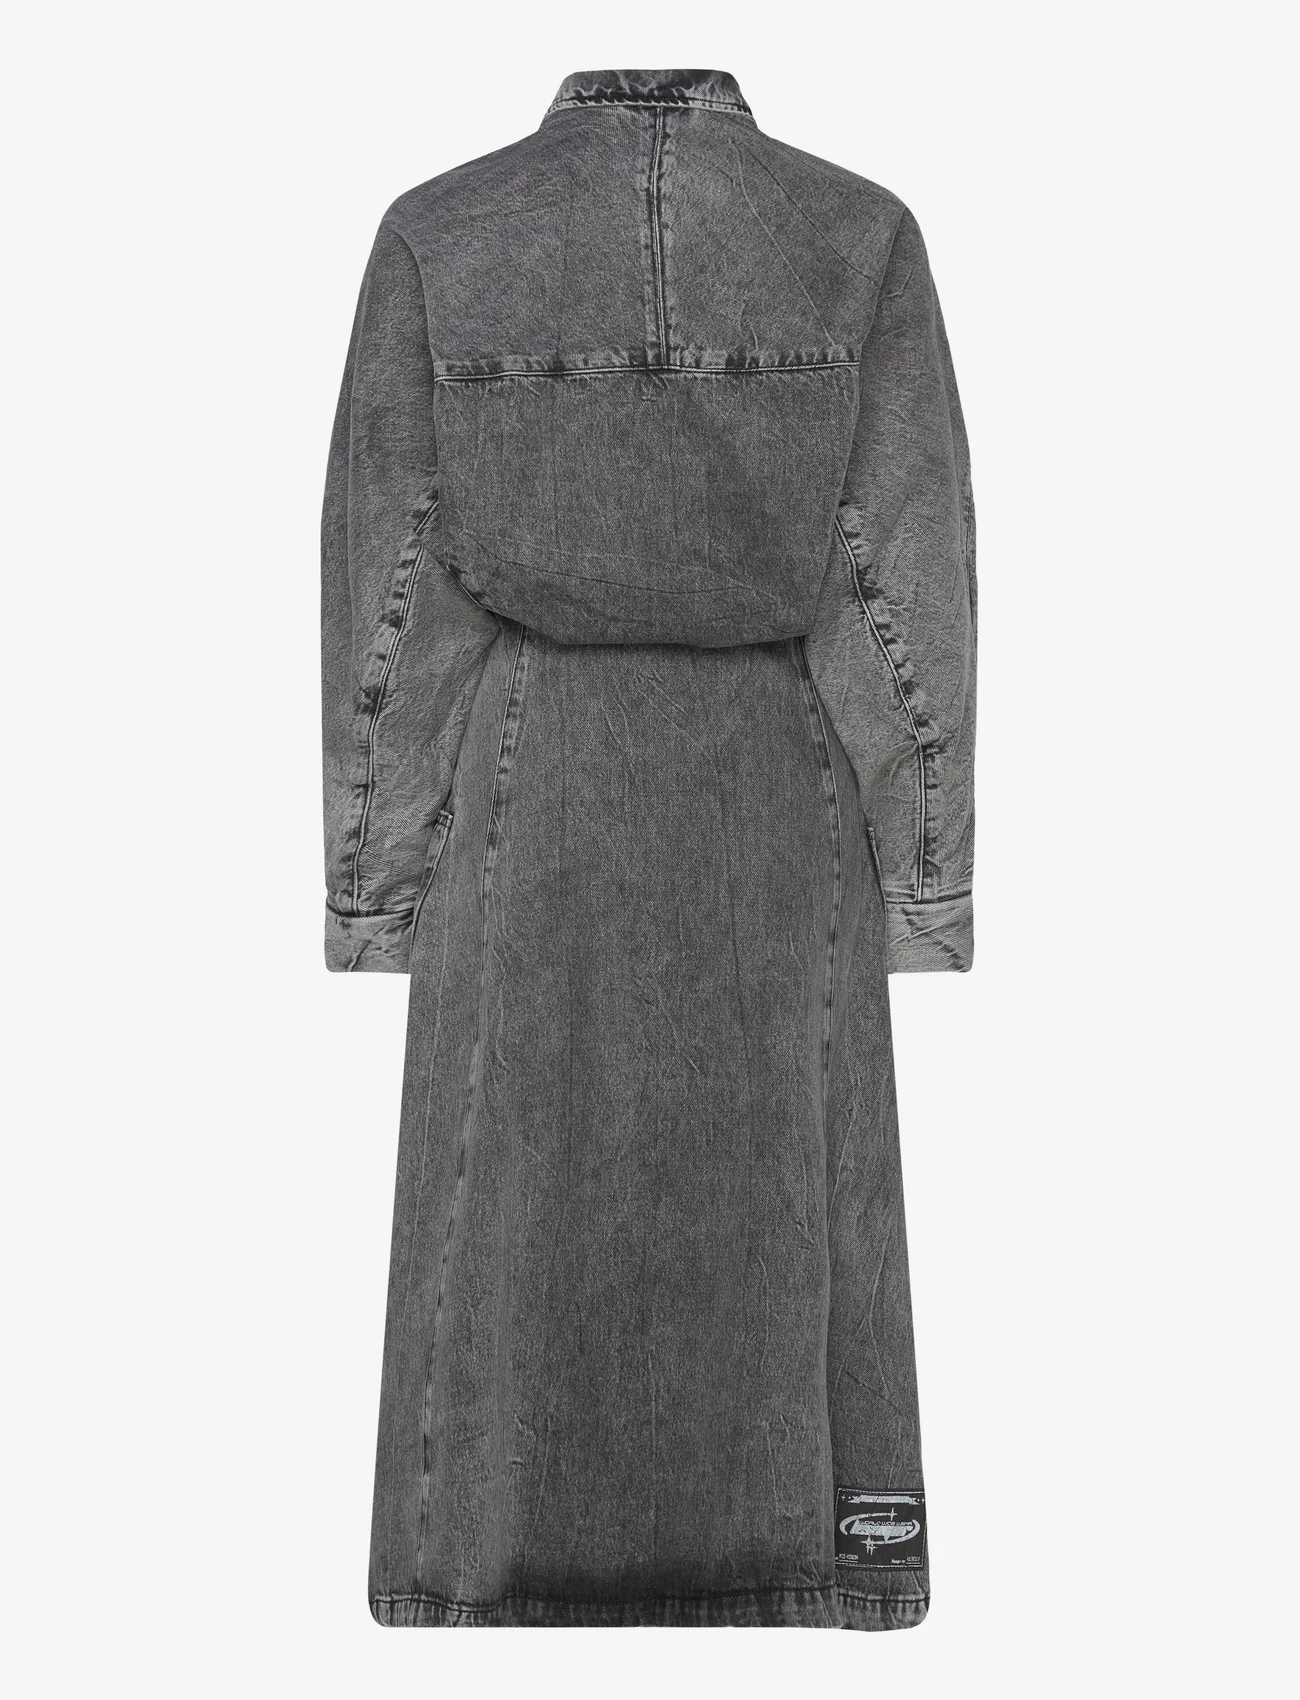 HOLZWEILER - Sousha Denim Long Coat - shirt dresses - dk. grey - 1